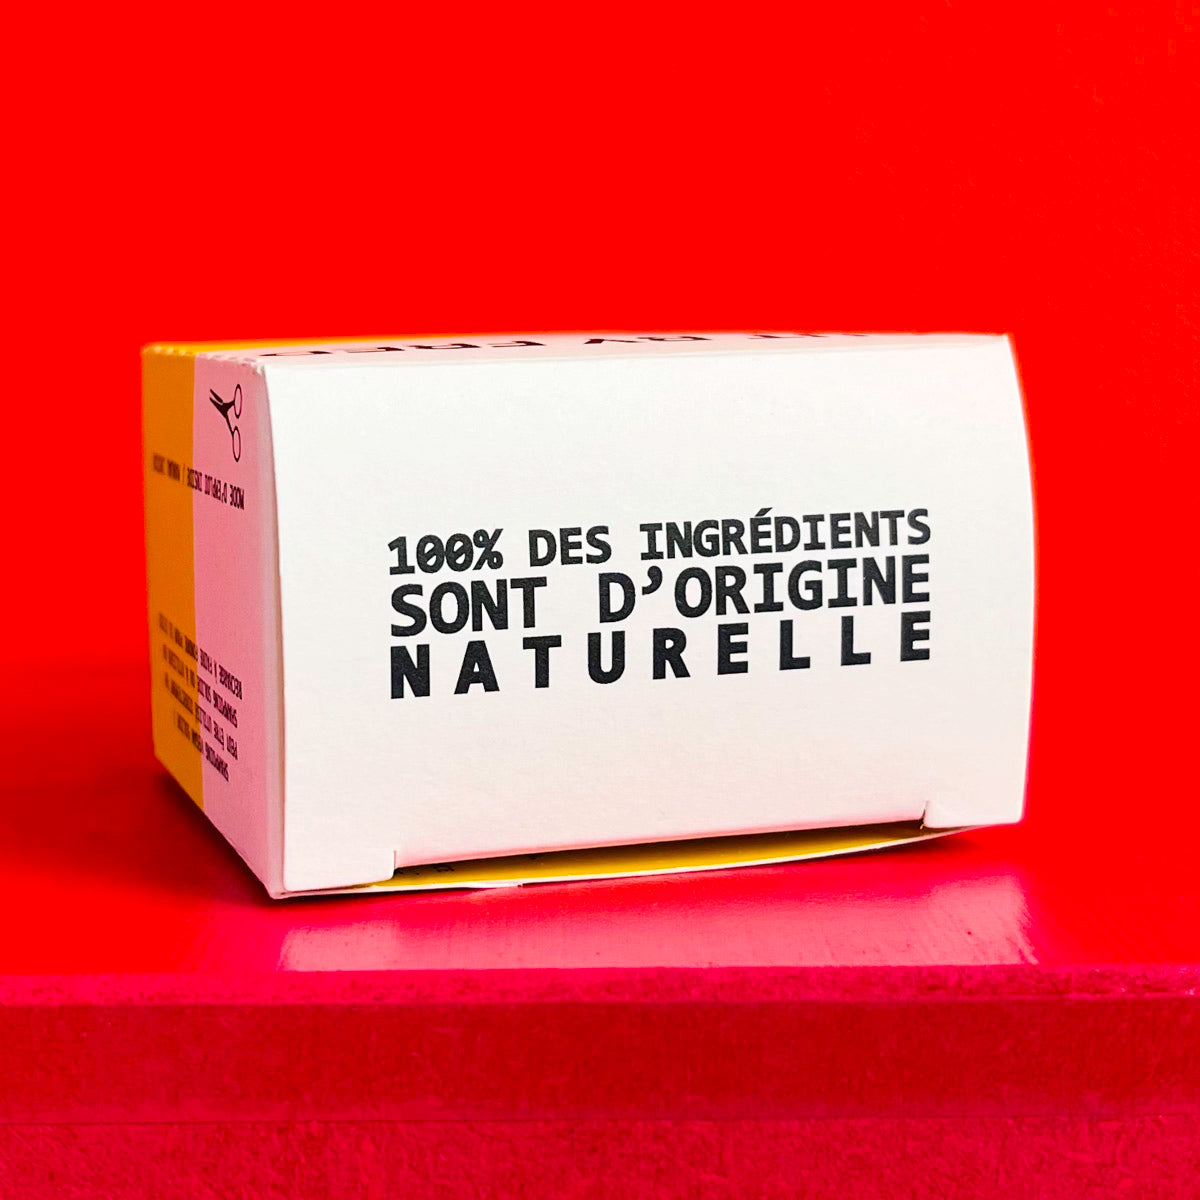 Solid Shampoo Detox (Nachfüllpackung) - 80 g